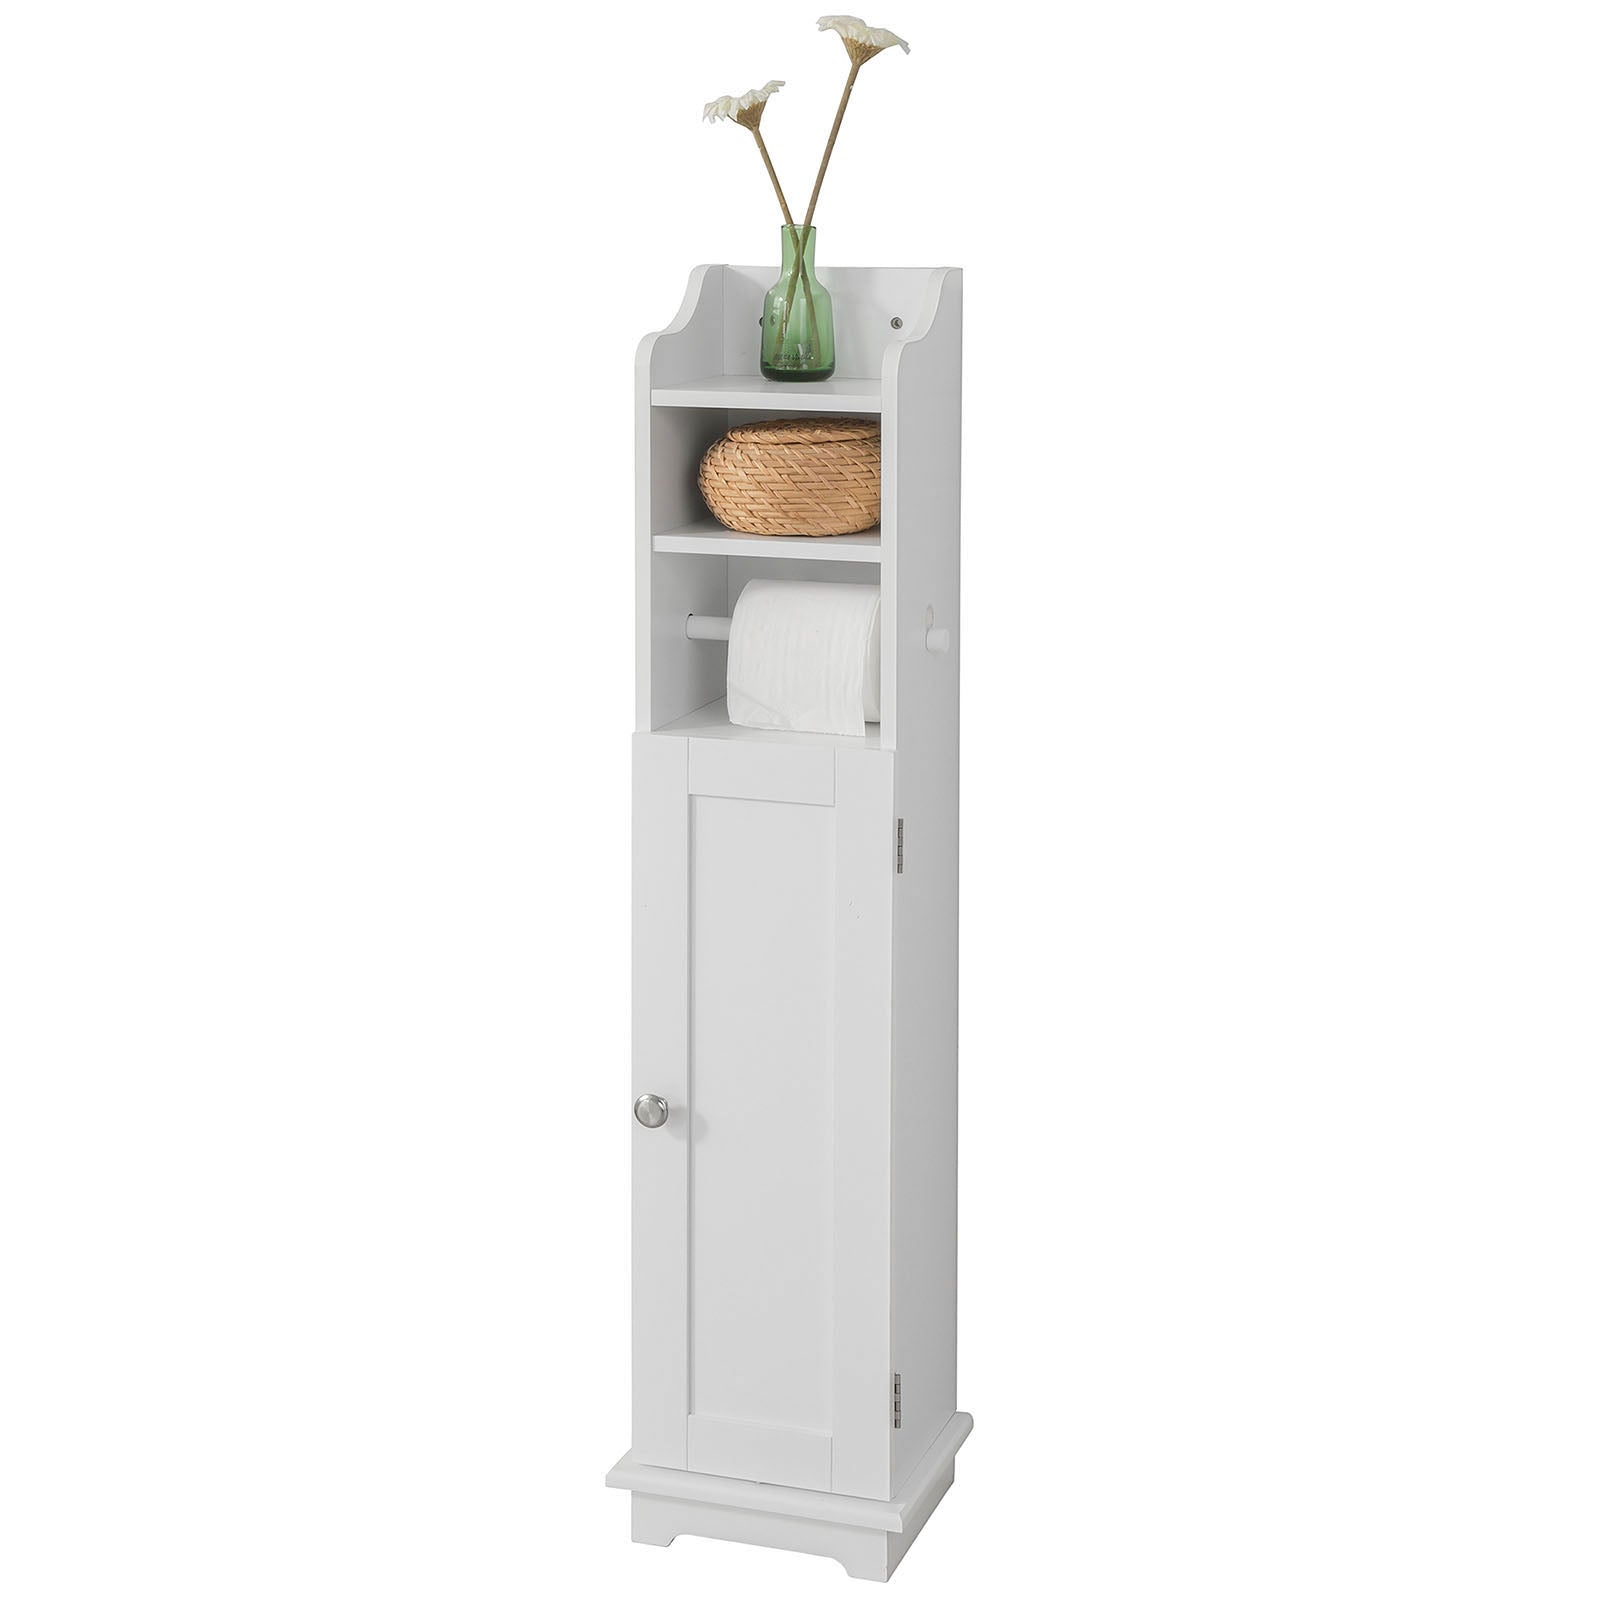 Haotian Free Standing Tall Bathroom Storage Cabinet, FRG236-W